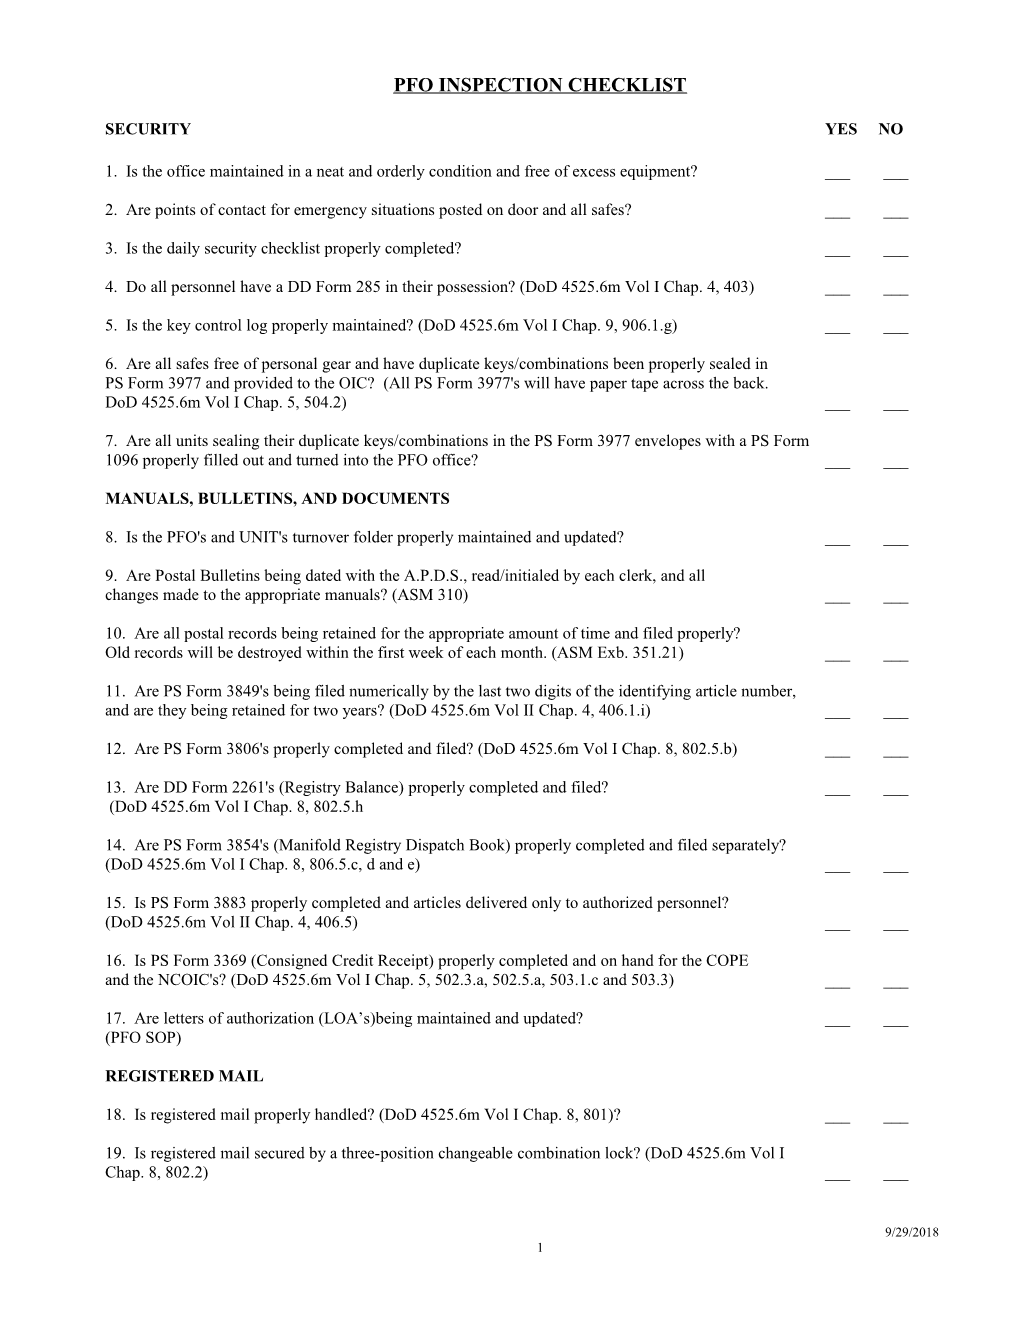 Cope Inspection Checklist